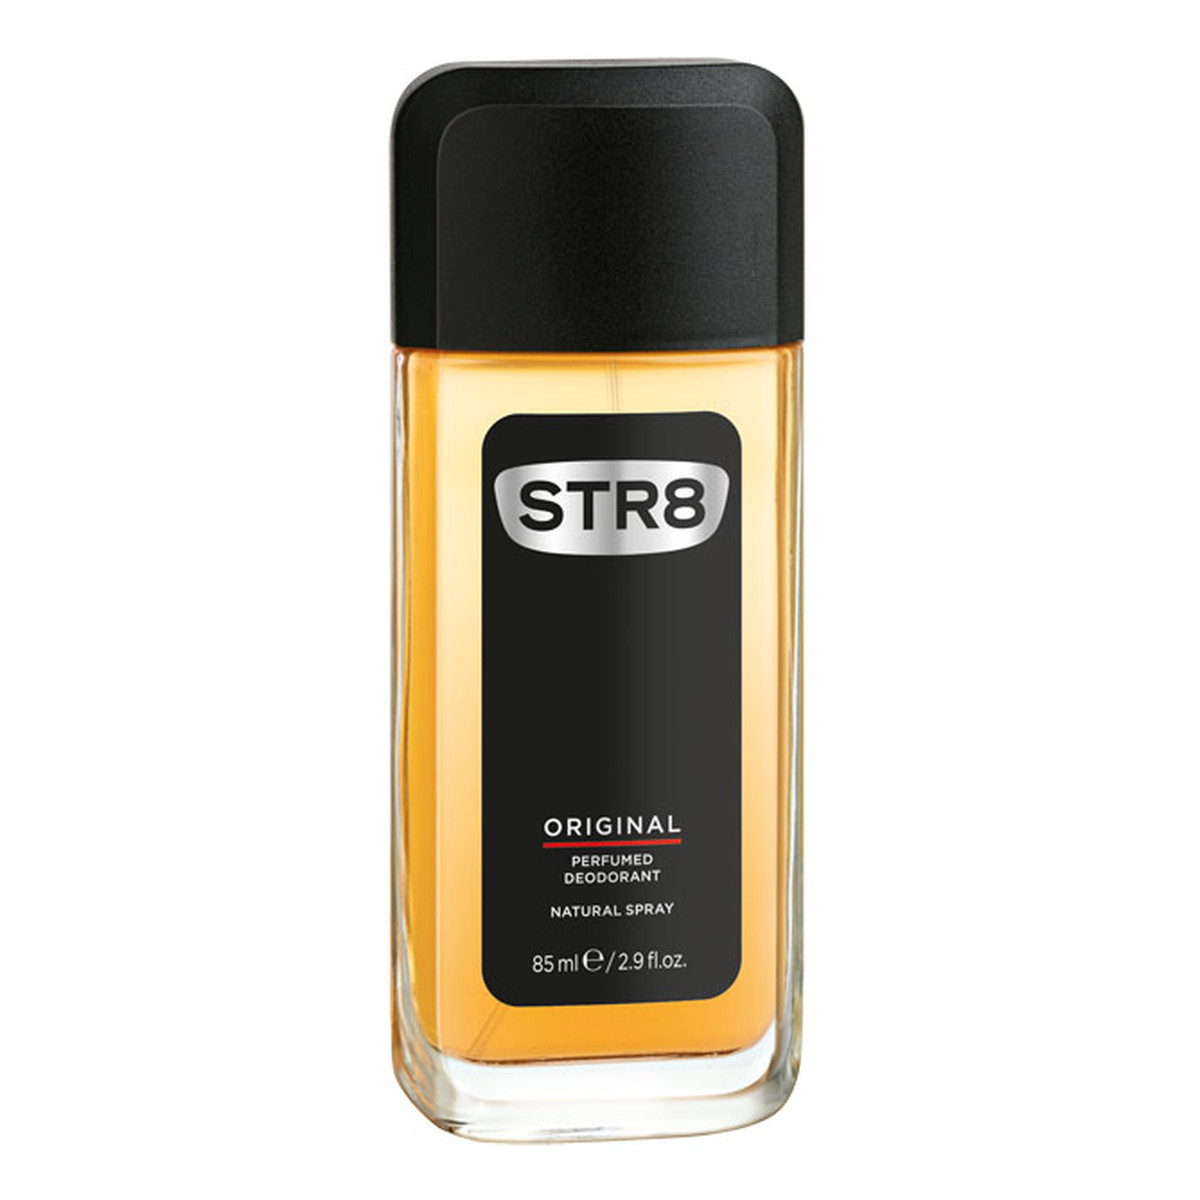 STR8 Original Dezodorant Spray 85ml